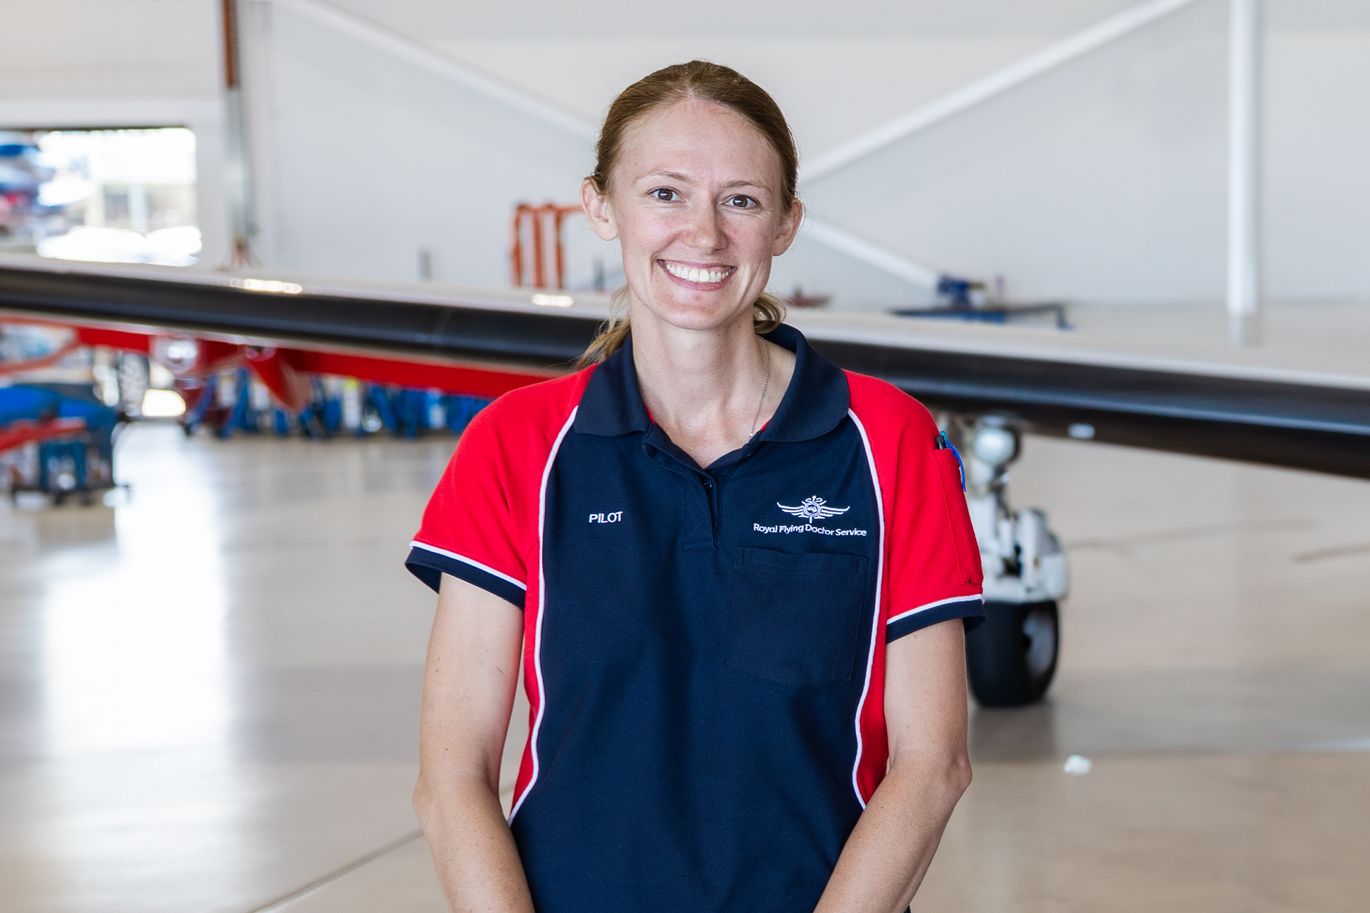 RFDS Pilot Jessica Dettmer